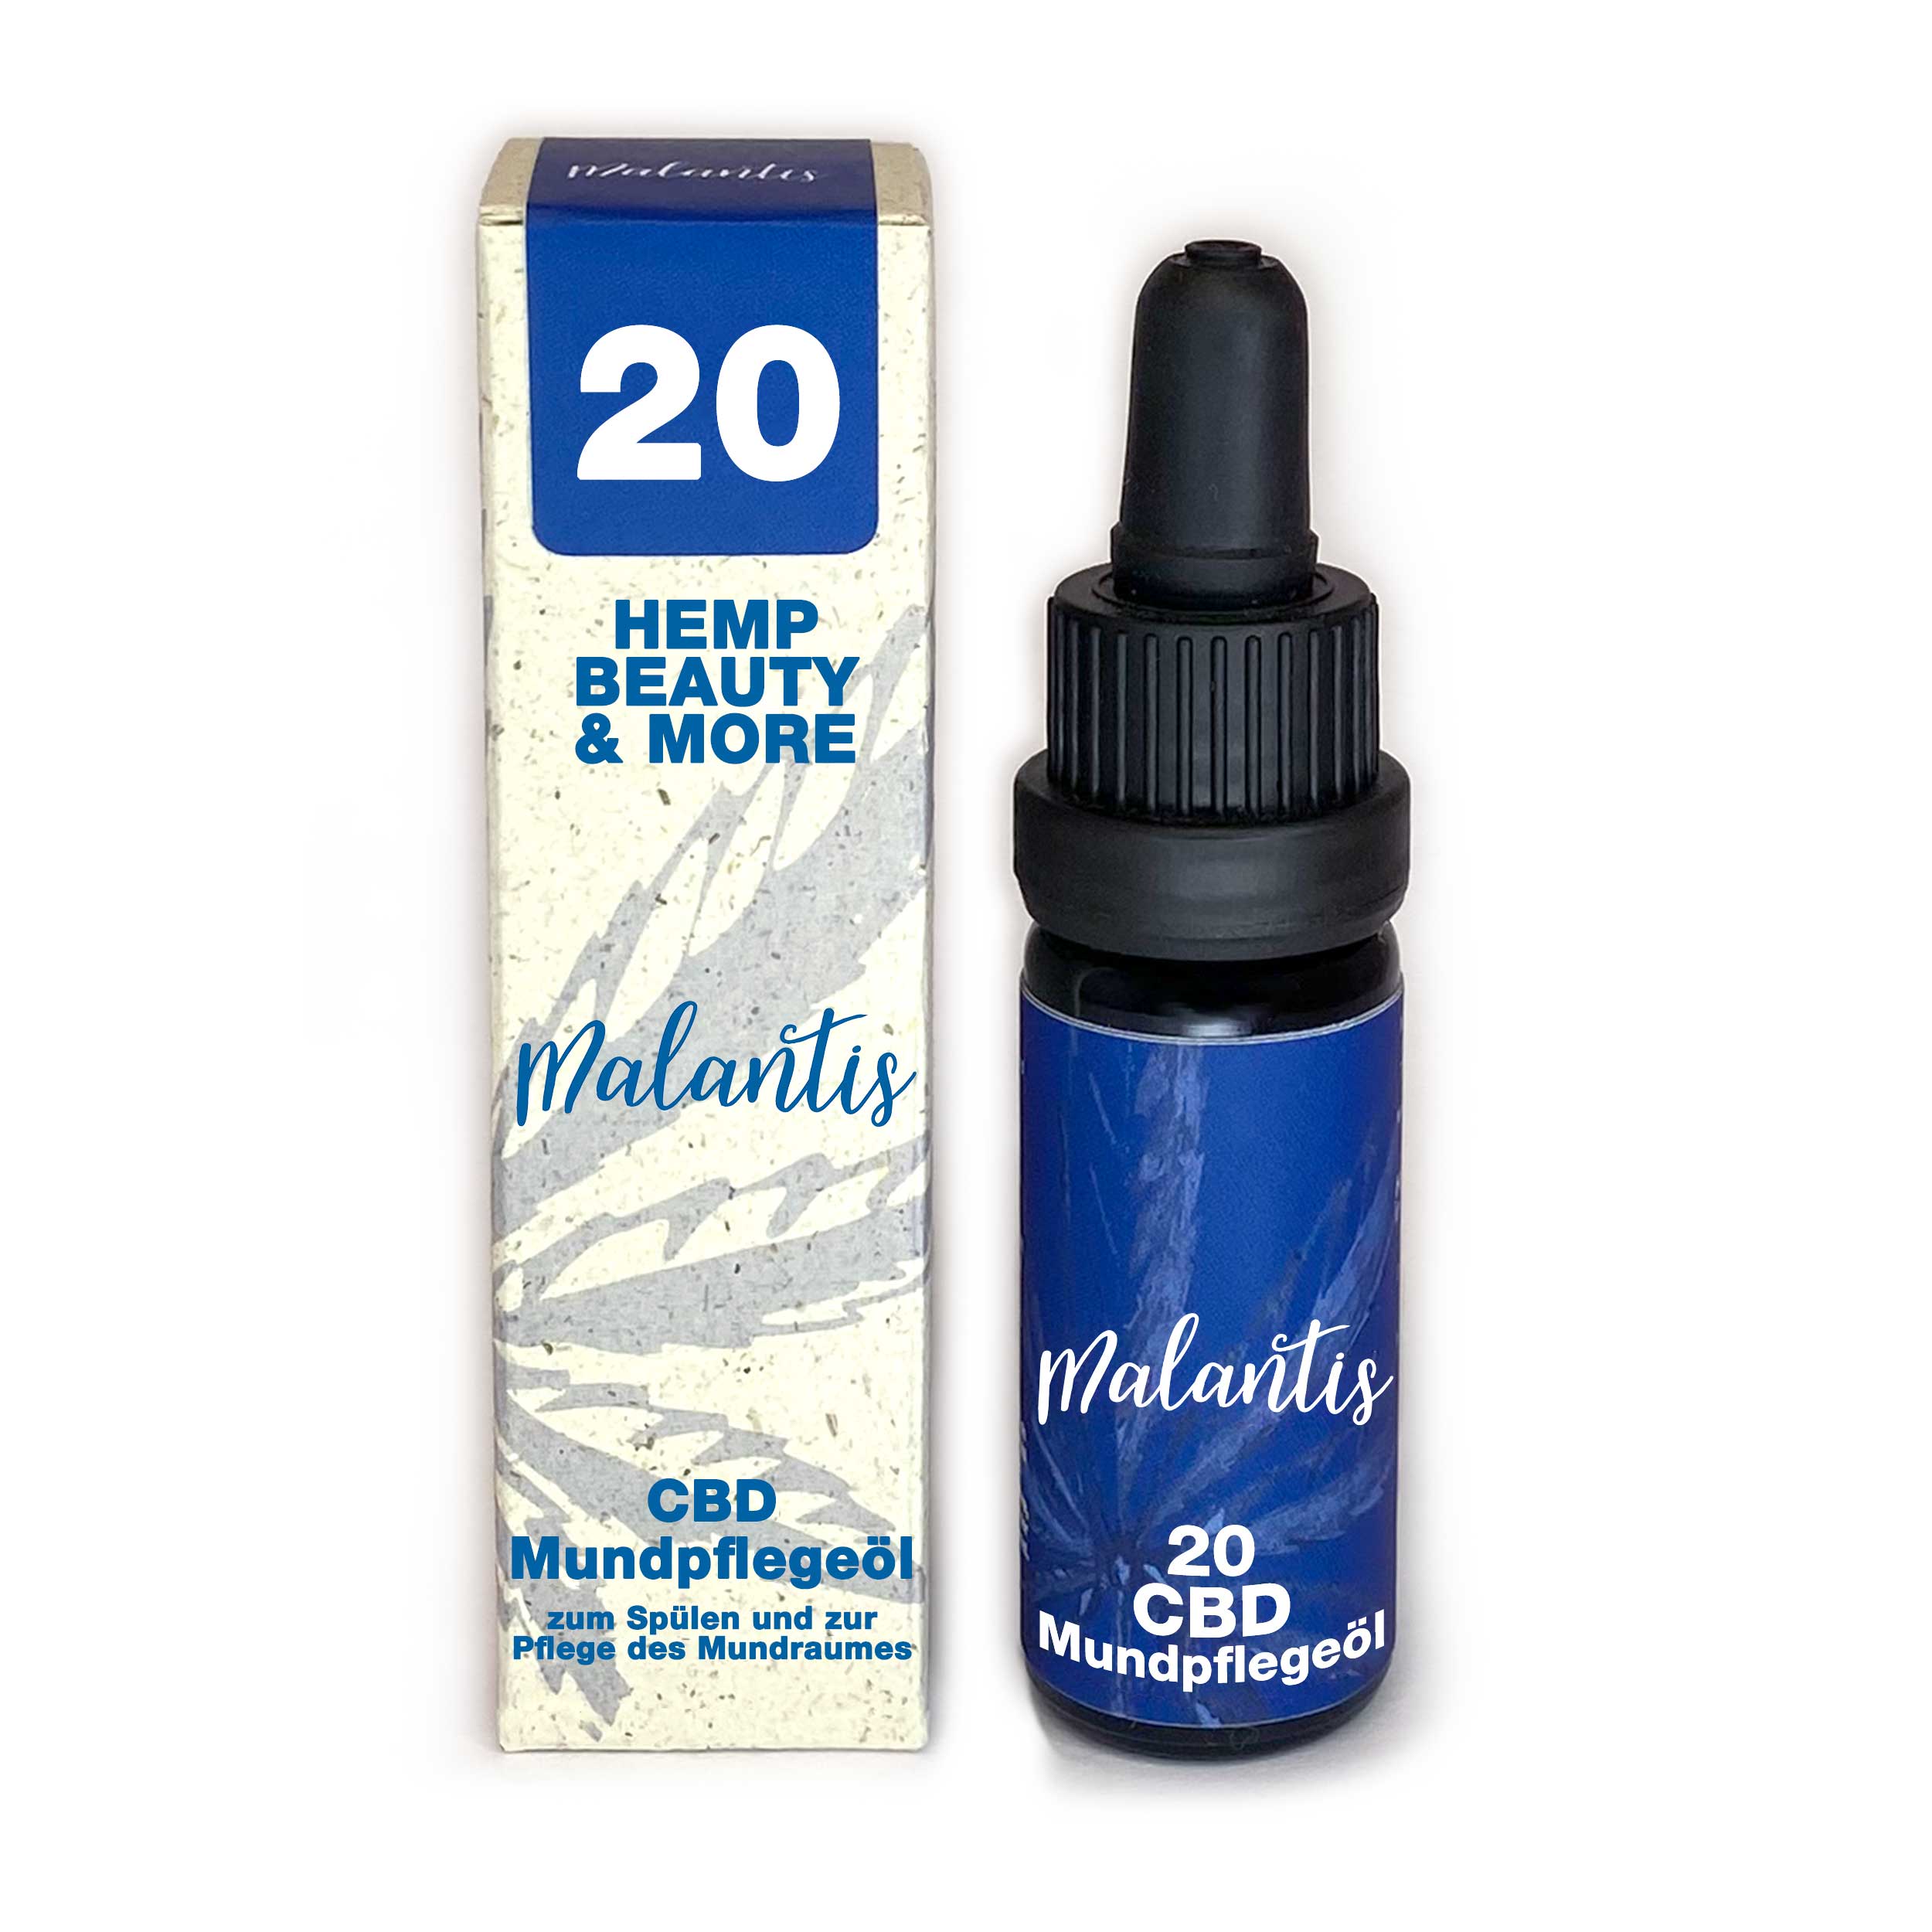 Malantis CBD Mundpflegeöl 20 – 10ml